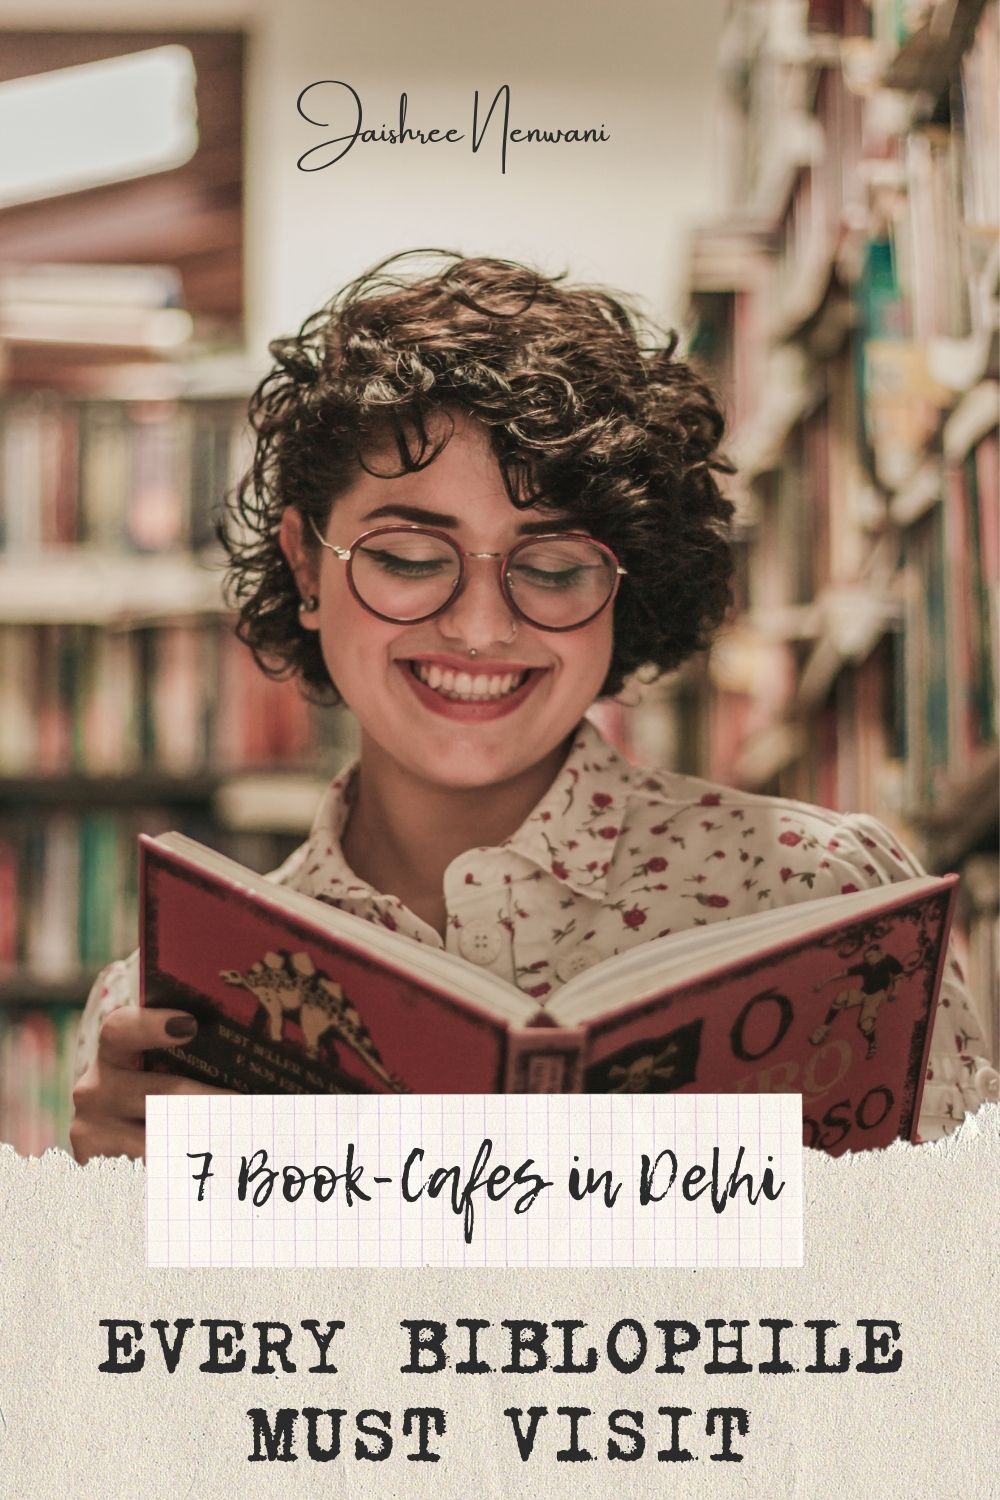 Book cafes in Delhi 